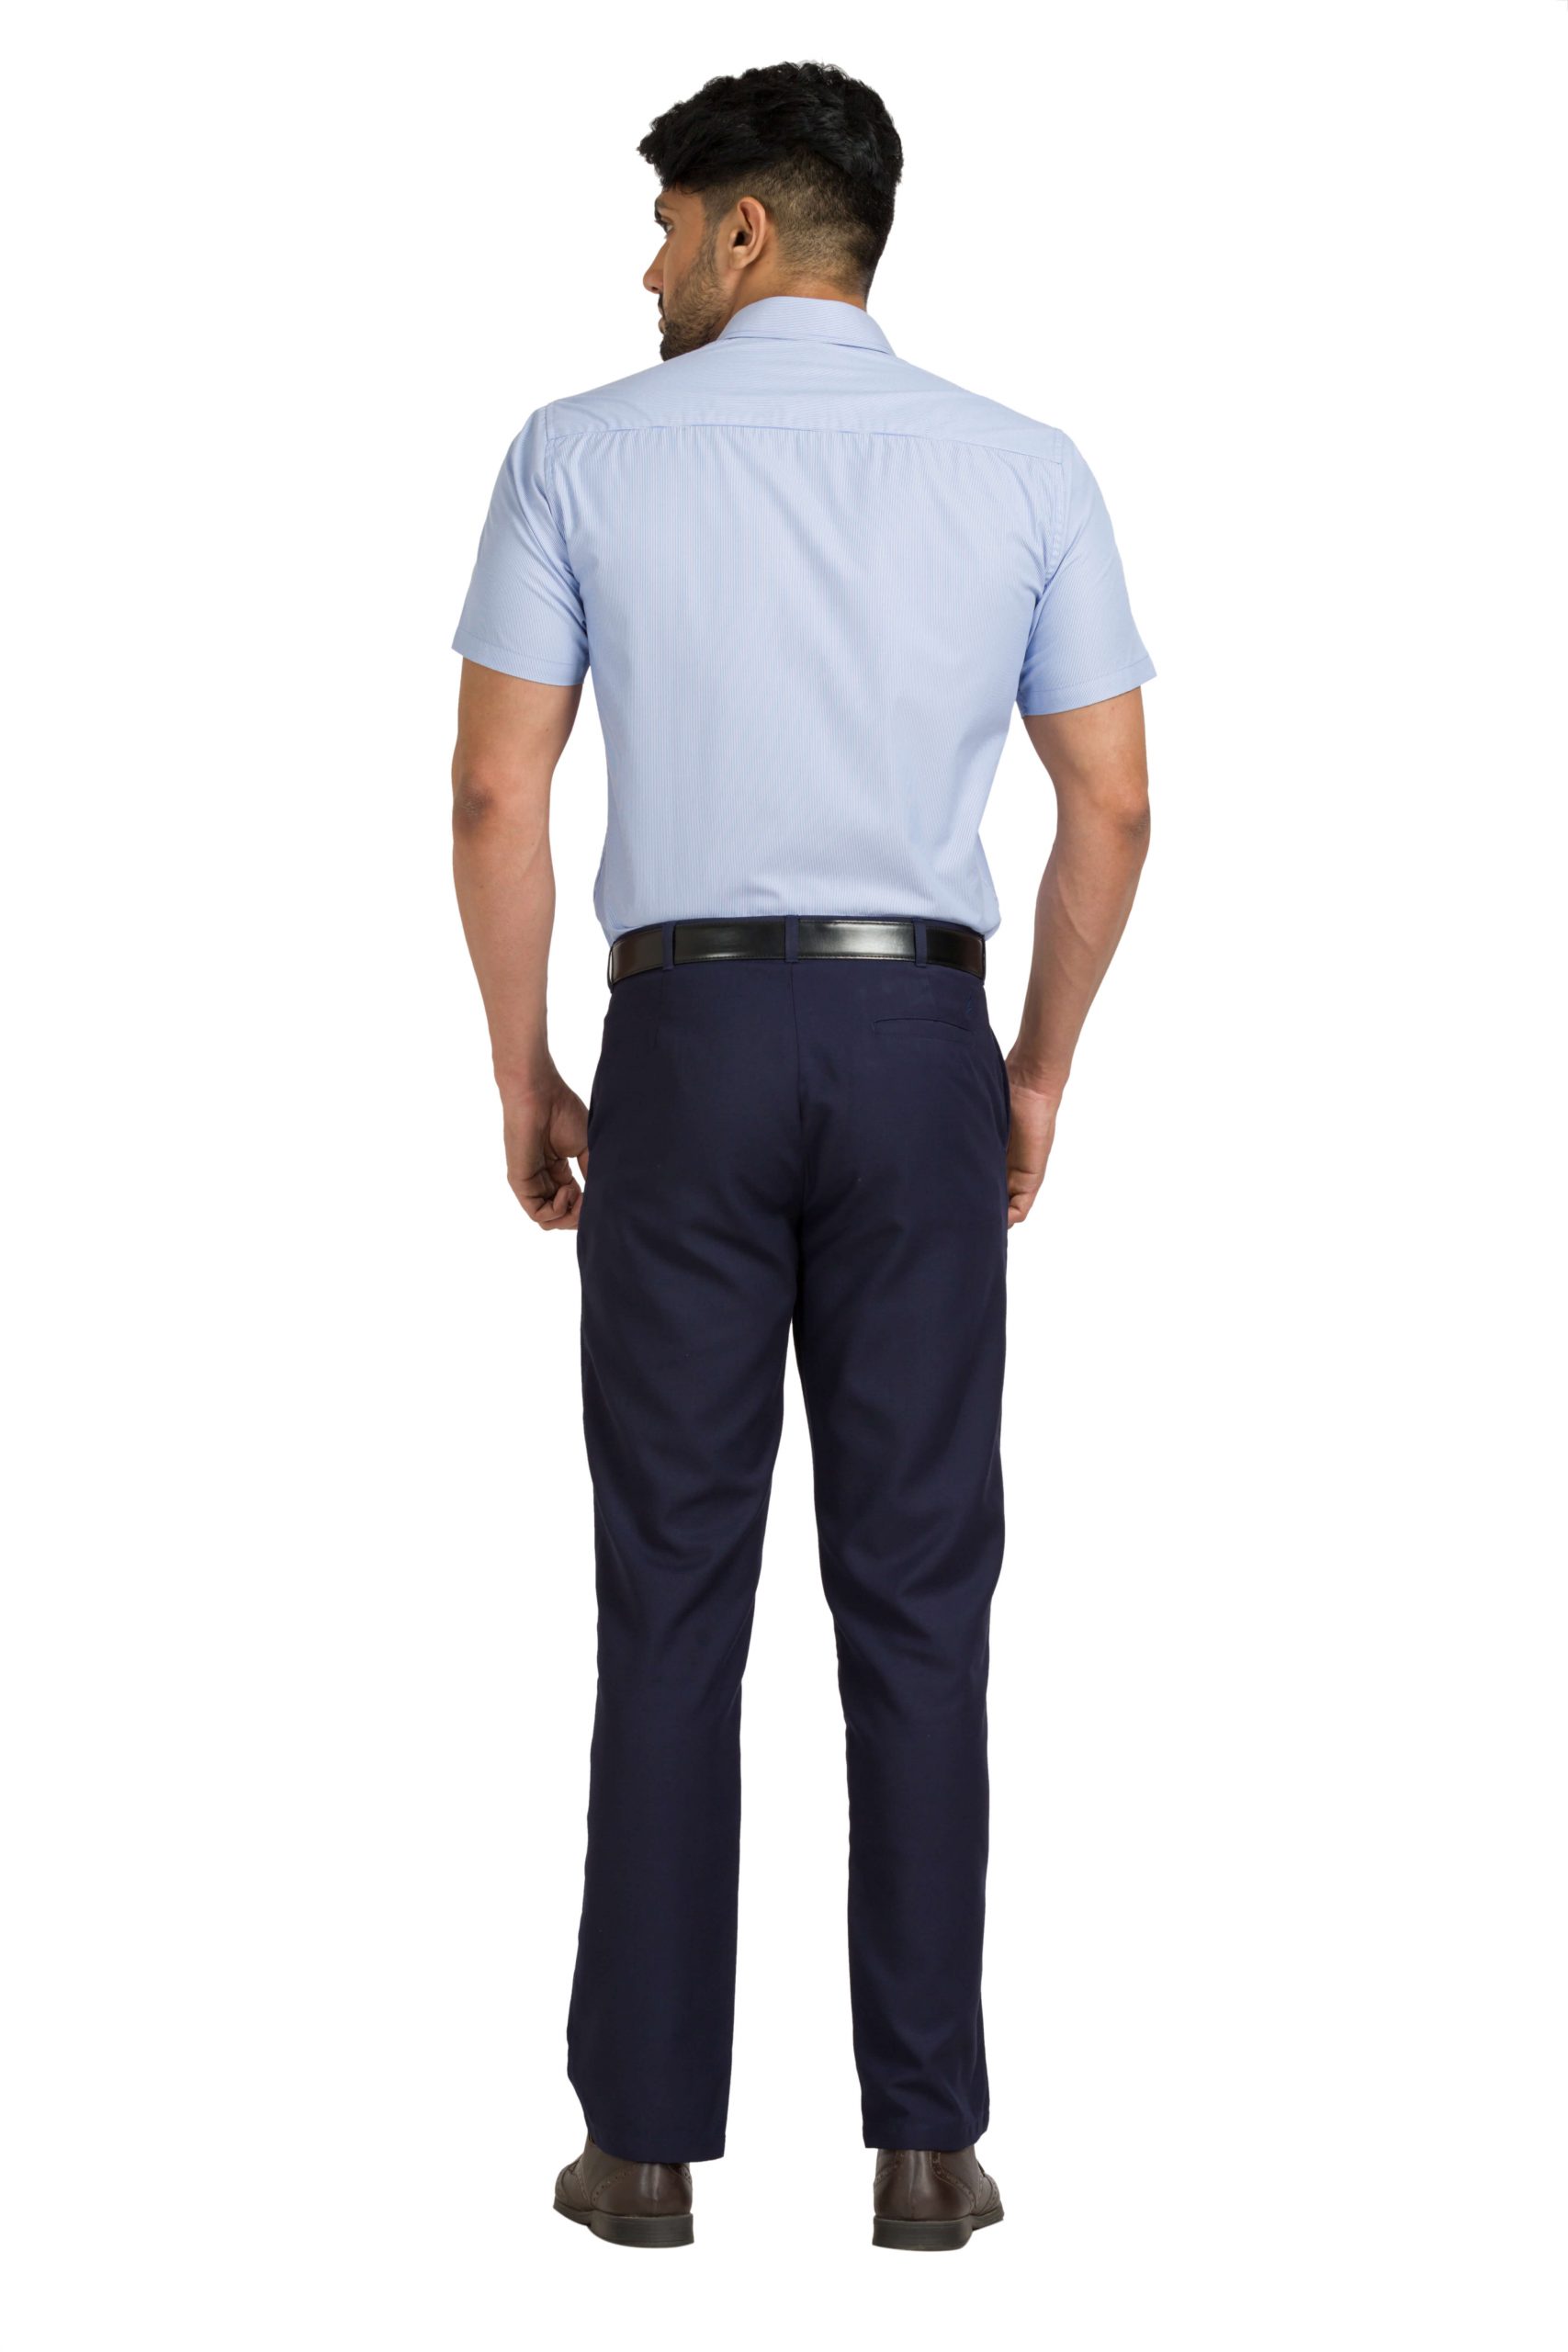 Cotton Blend Blue Stripe Half Sleeve Formal Shirt